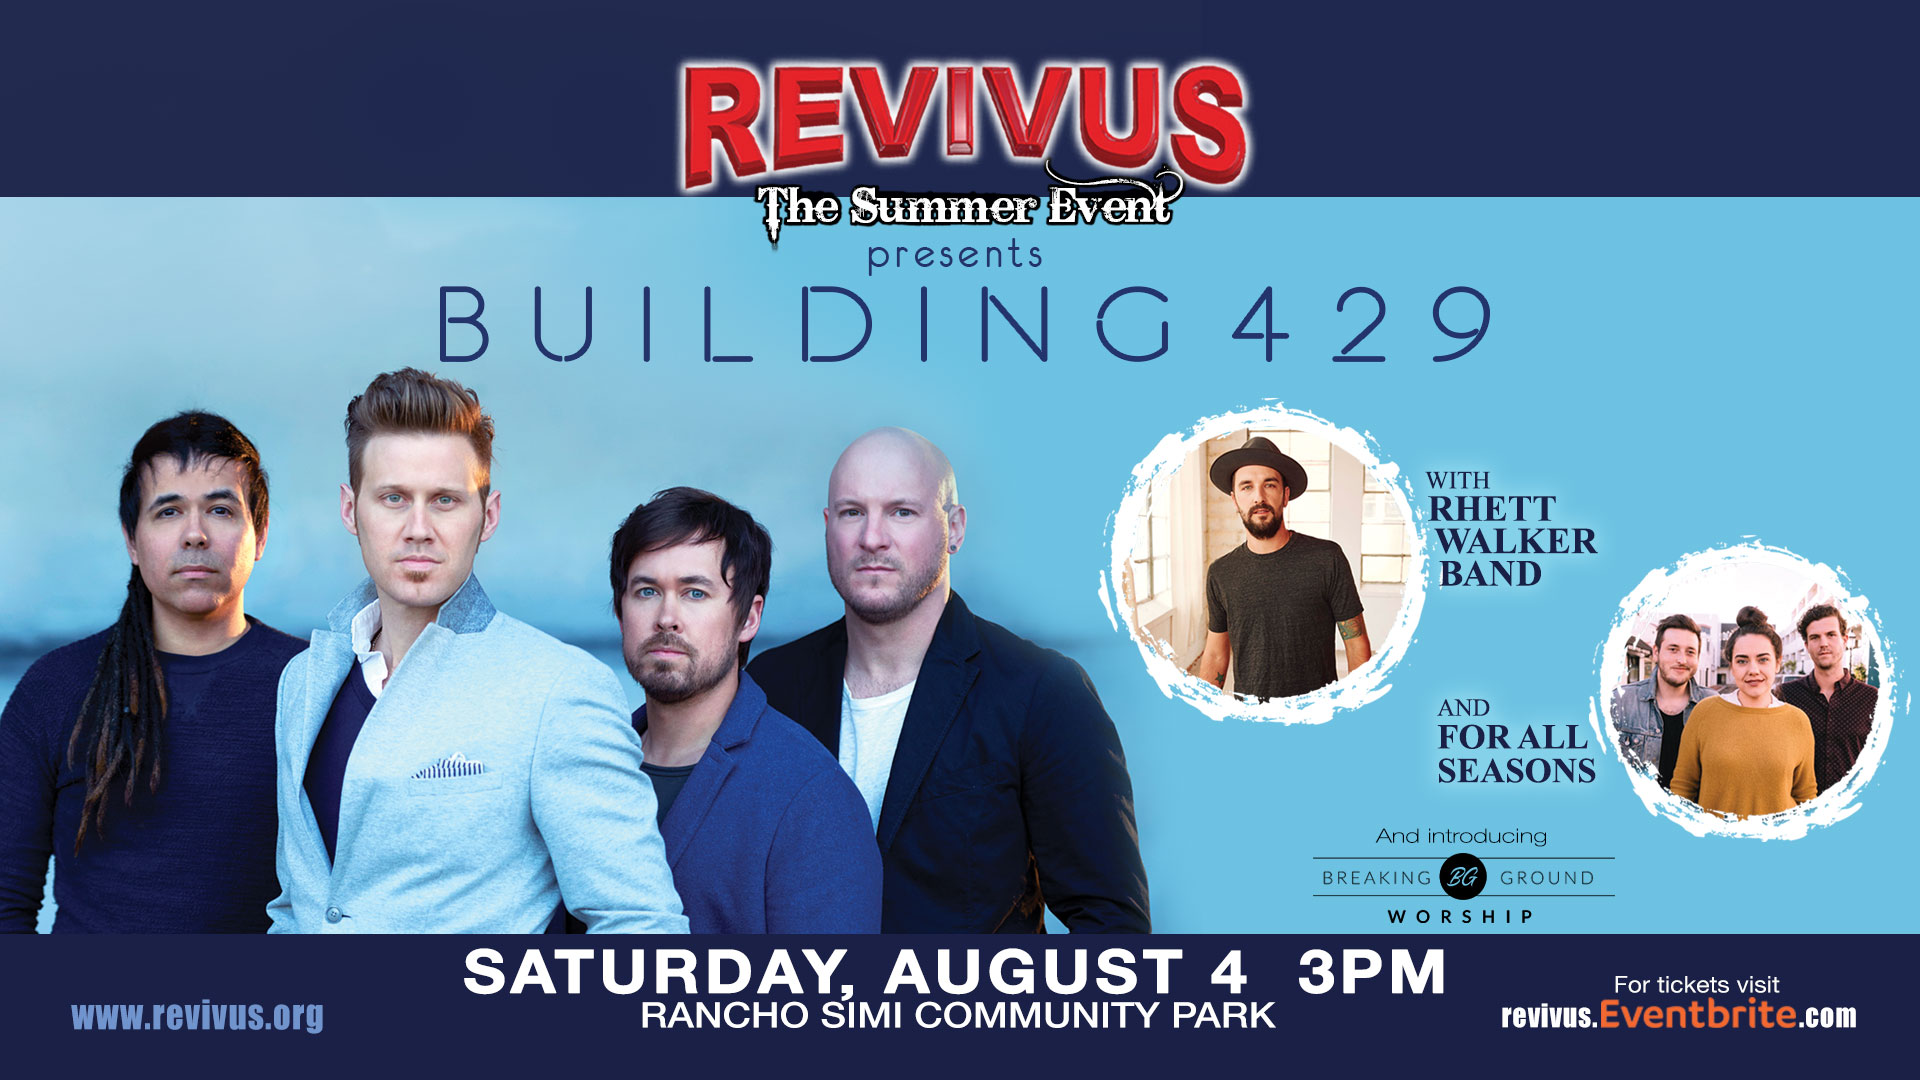 Revivus: The Summer Event